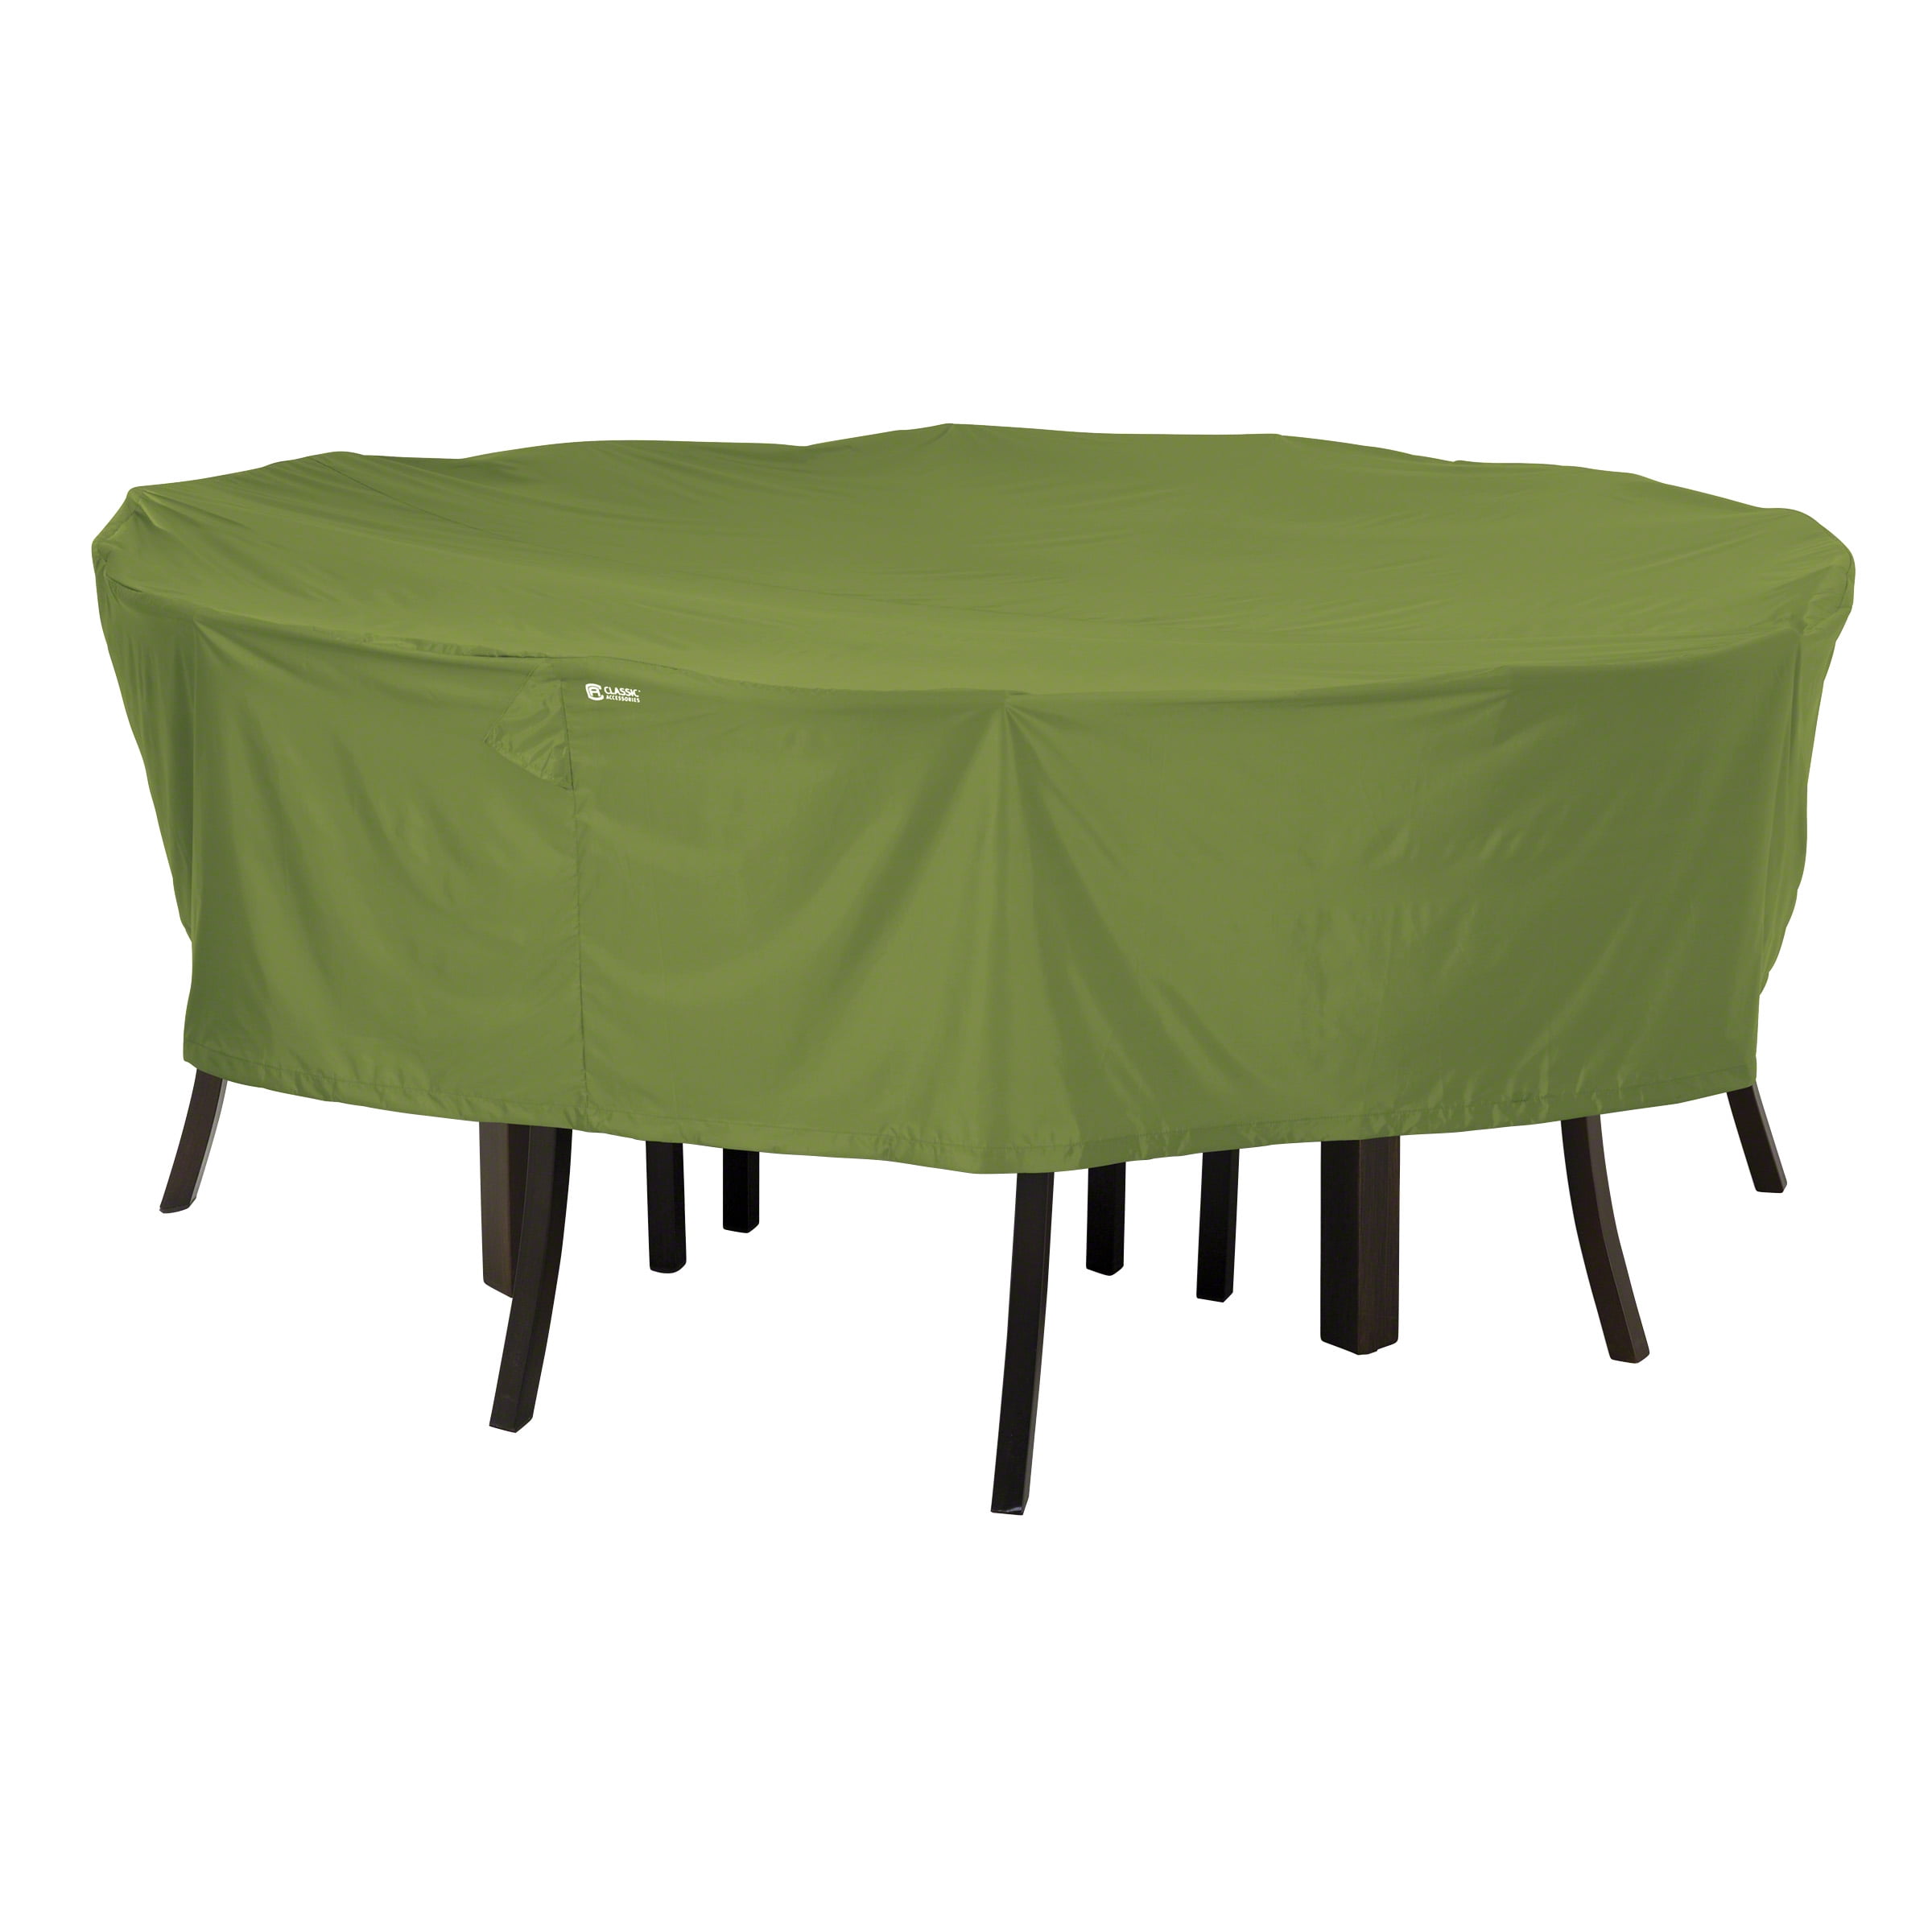 94" Large Round Veranda Patio Set Cover Table & Chair Outdoor Garden Furniture 